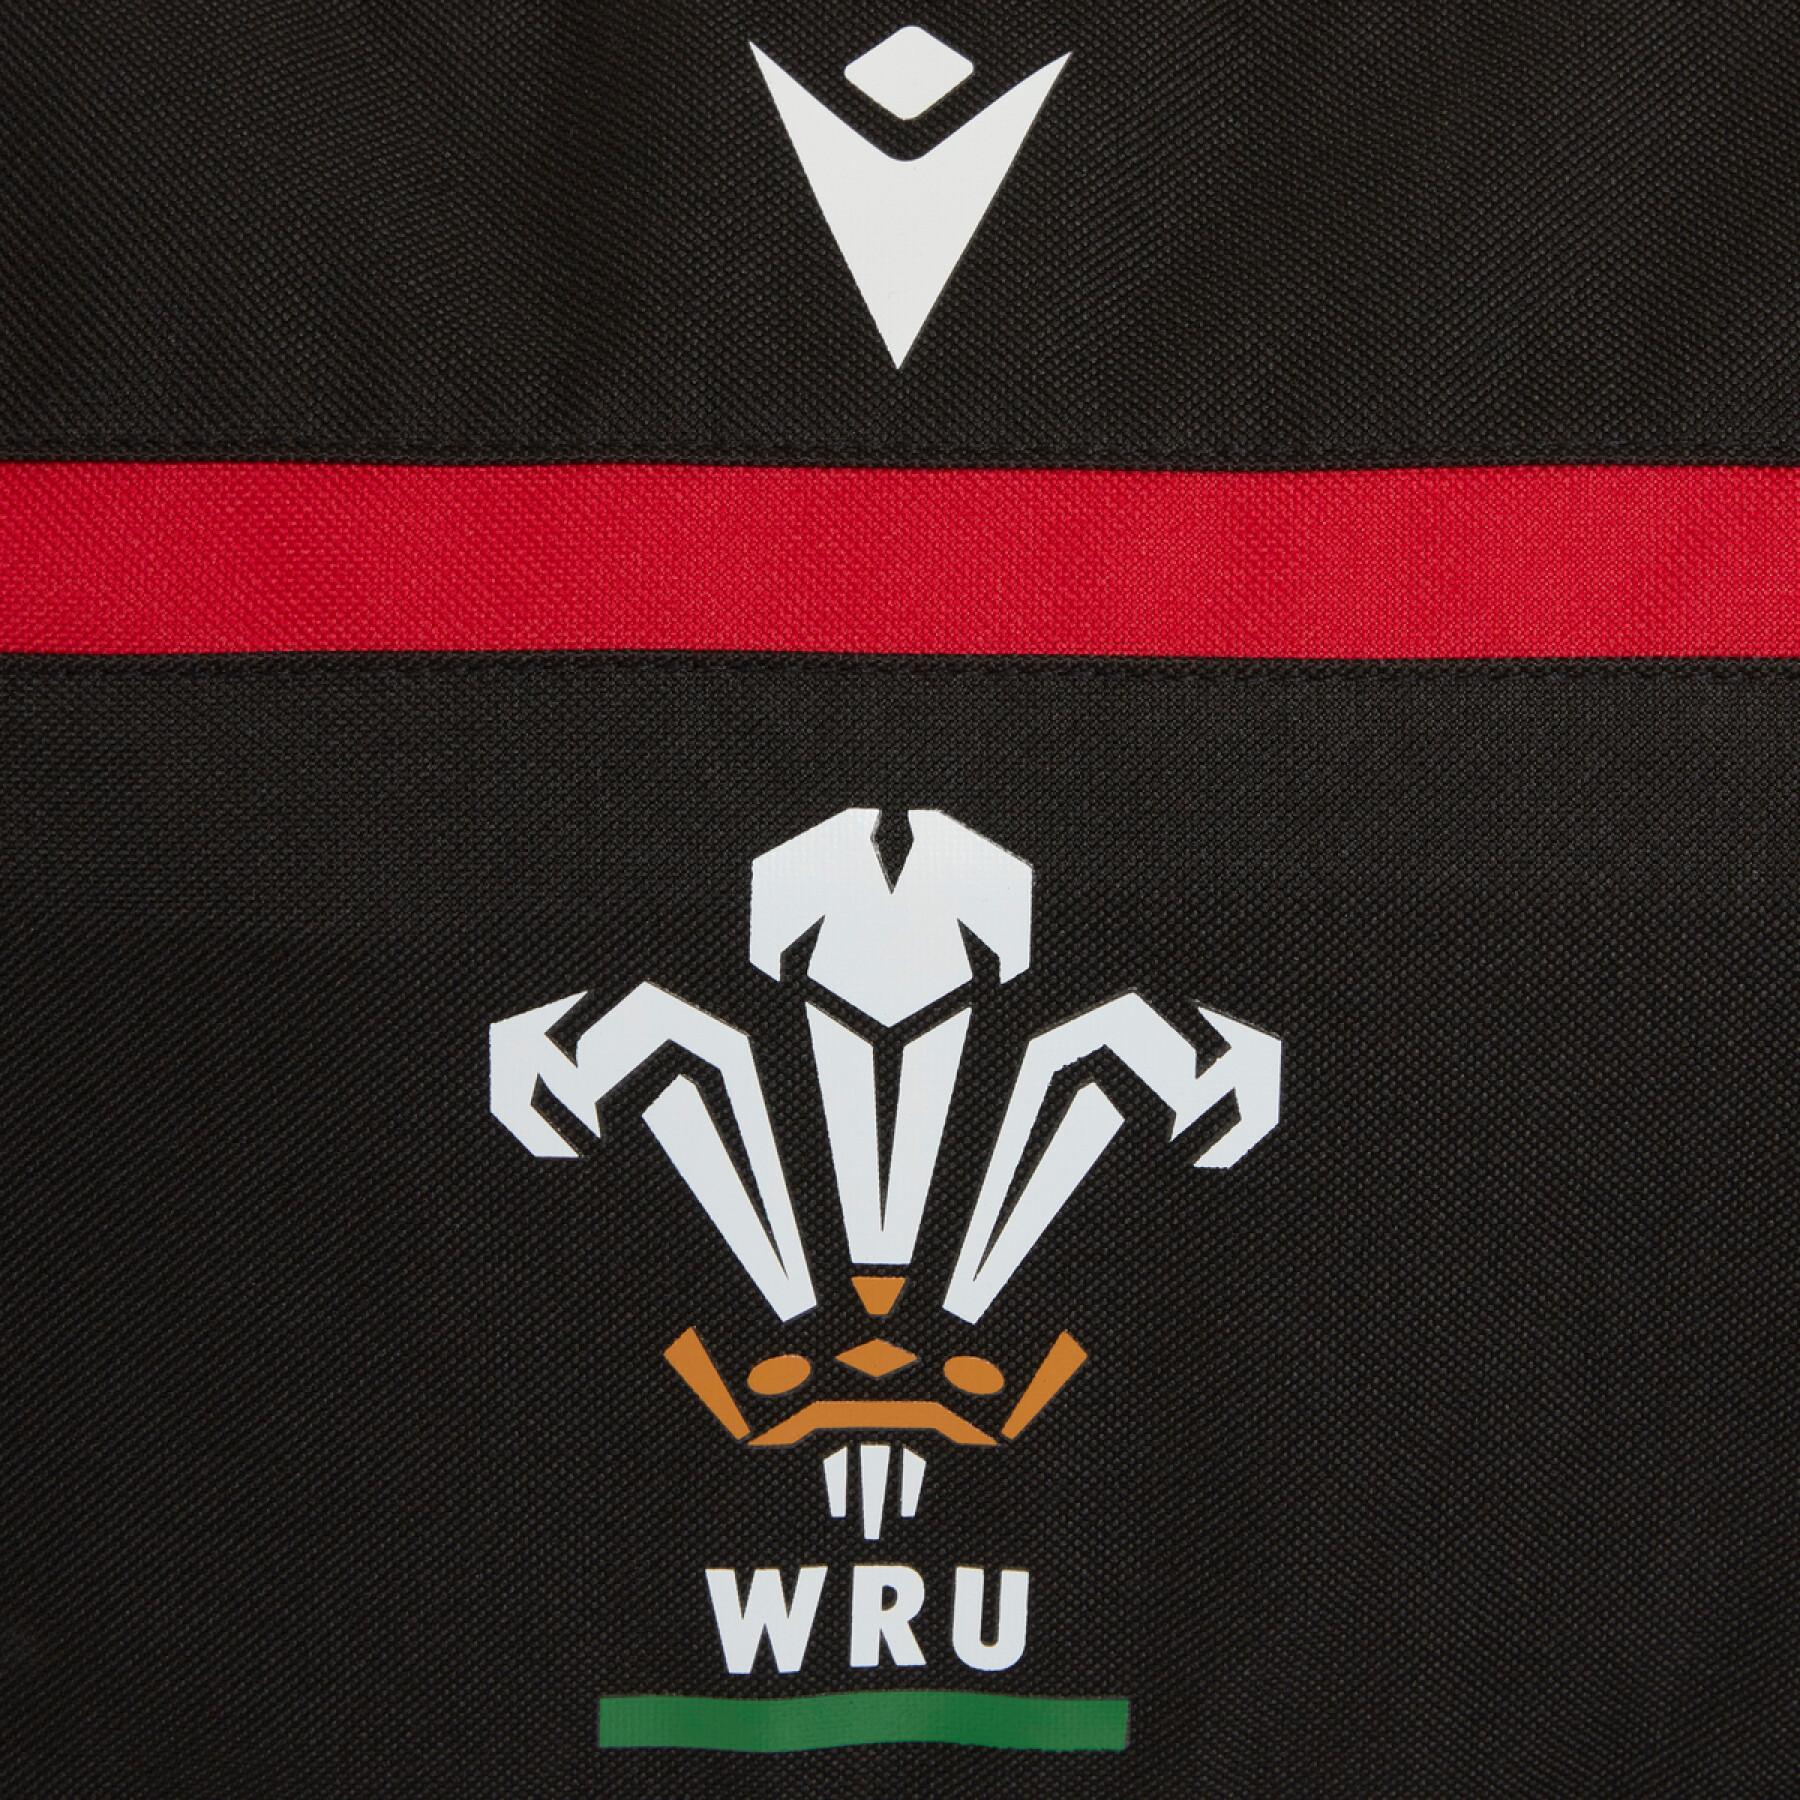 Bolsa de deporte Pays de Galles rugby 2020/21